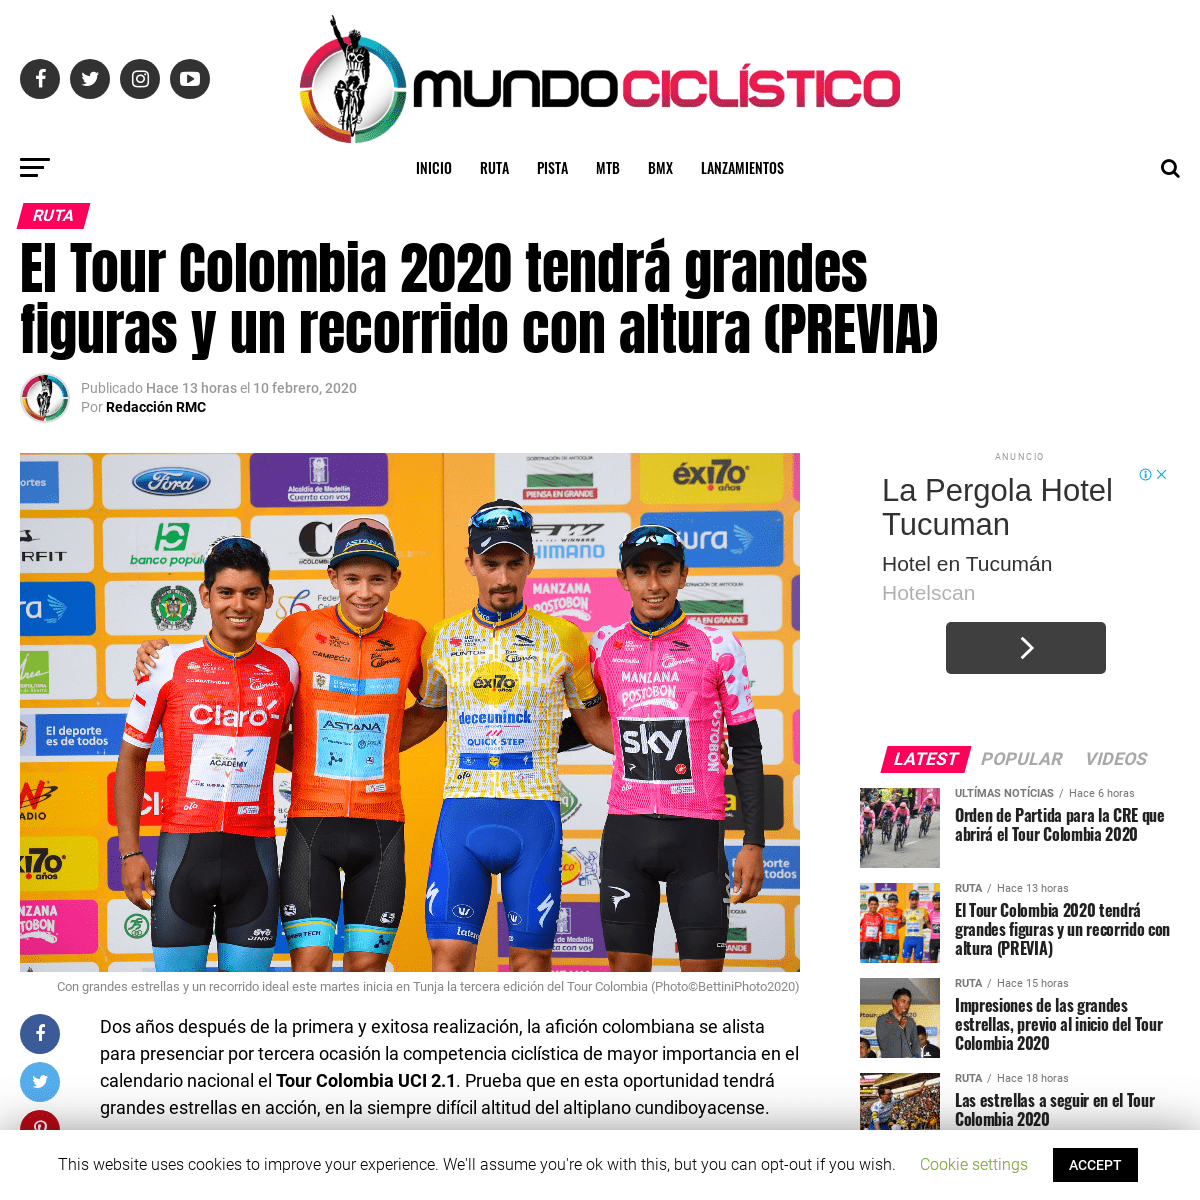 A complete backup of www.revistamundociclistico.com/2020/el-tour-colombia-2020-tendra-grandes-figuras-y-un-recorrido-con-altura-